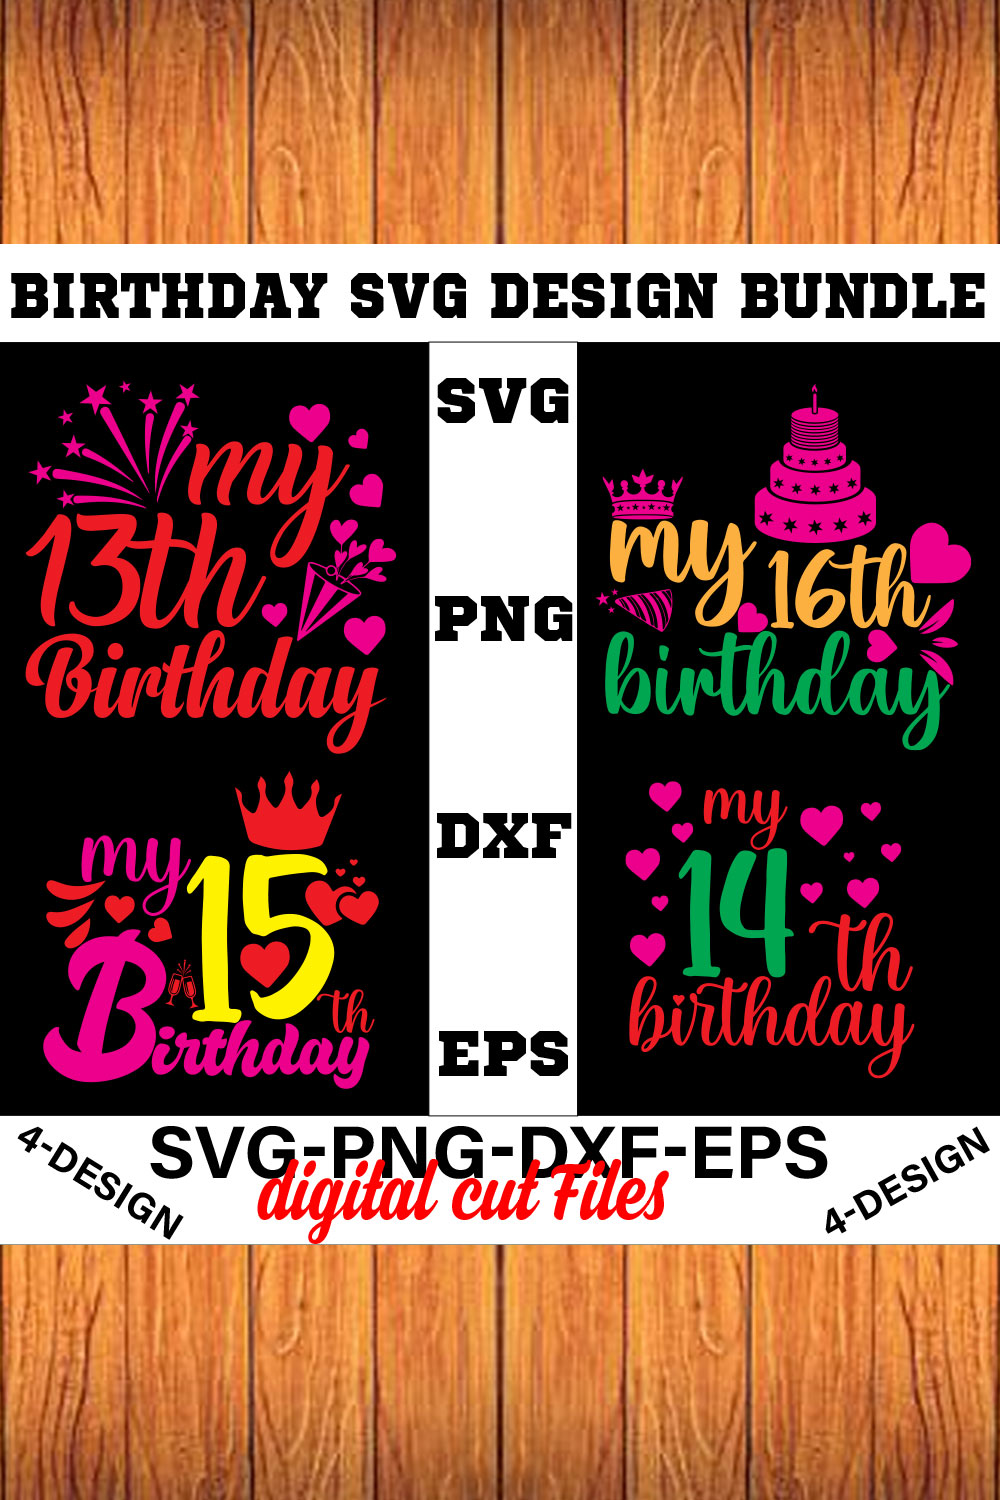 birthday svg design bundle Happy birthday svg bundle hand lettered birthday svg birthday party svg Volume-04 pinterest preview image.